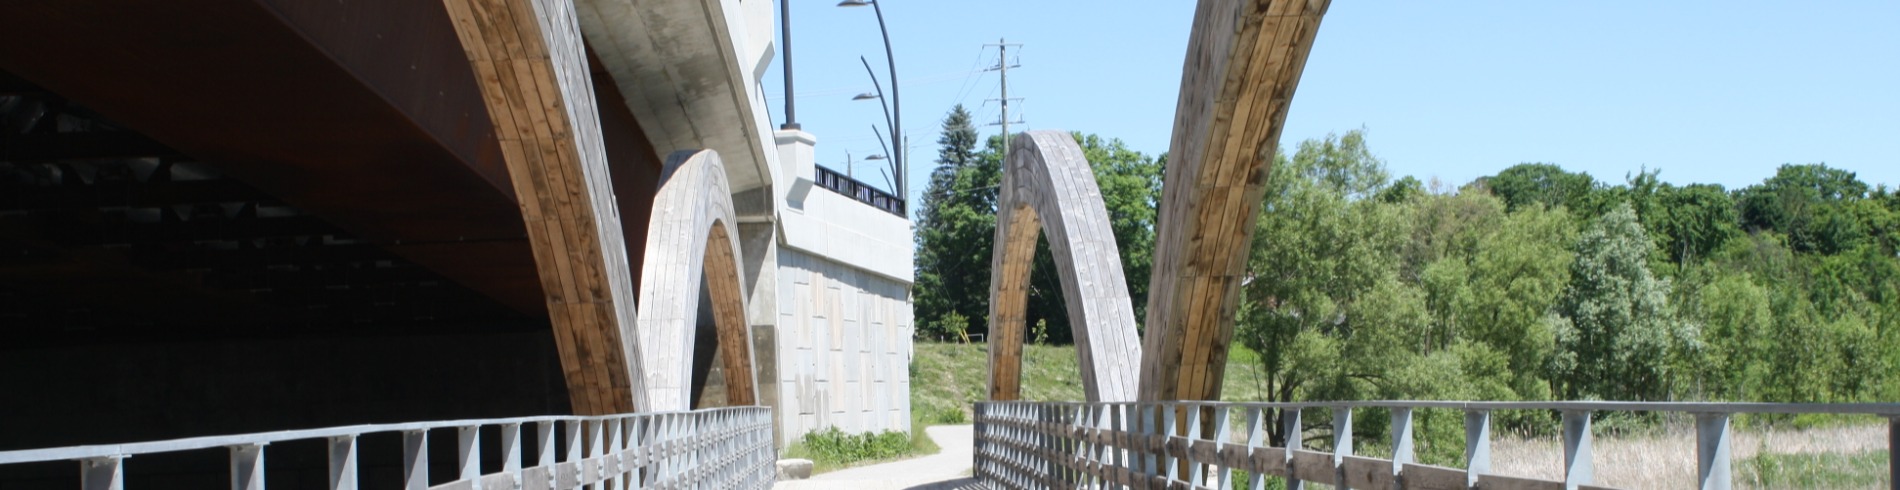 New artistic pedestrian bridge and walkway